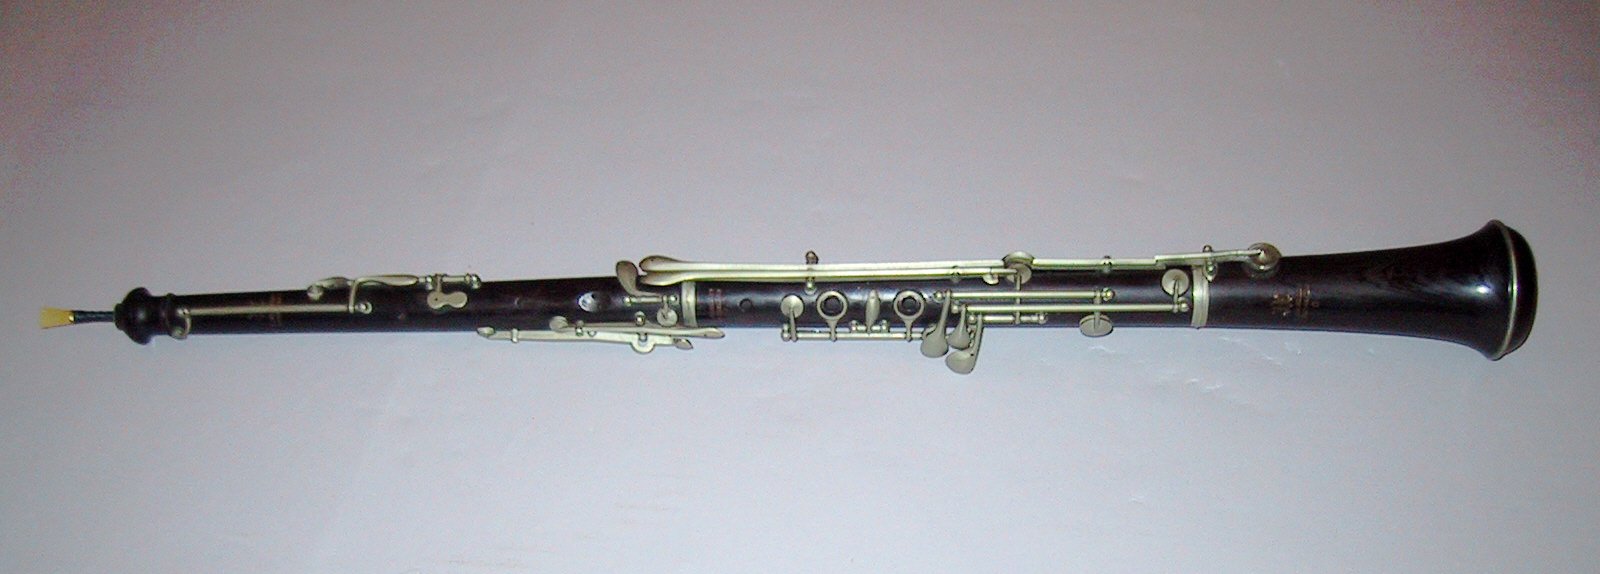 Oboe mit Doppelrohr Mundstück Stock Photo